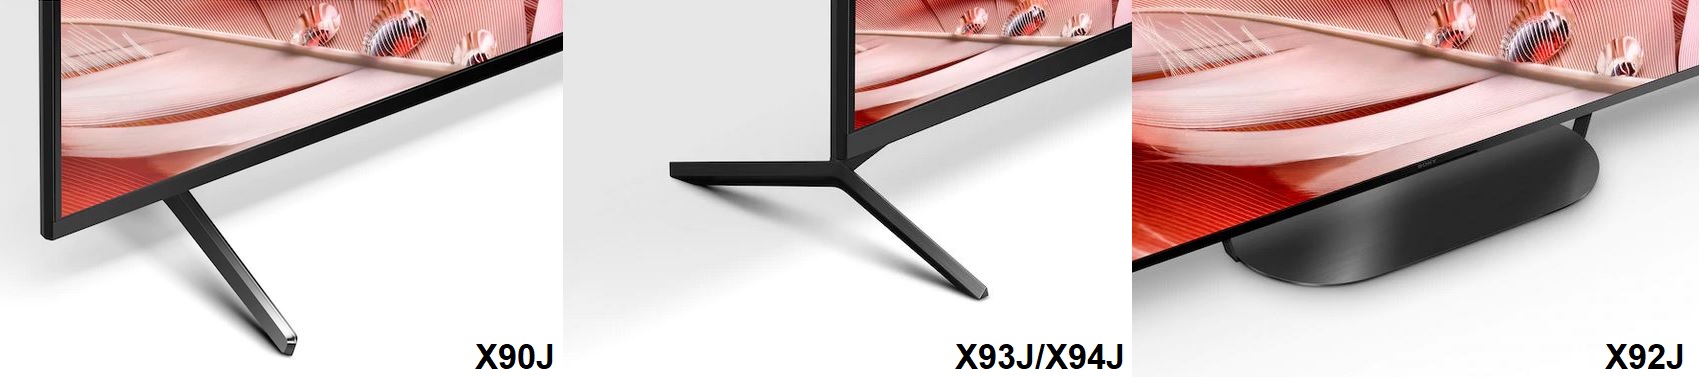 Google TV Sony BRAVIA XR LED X90J 4K HDMI 2.1 test nózki porównanie